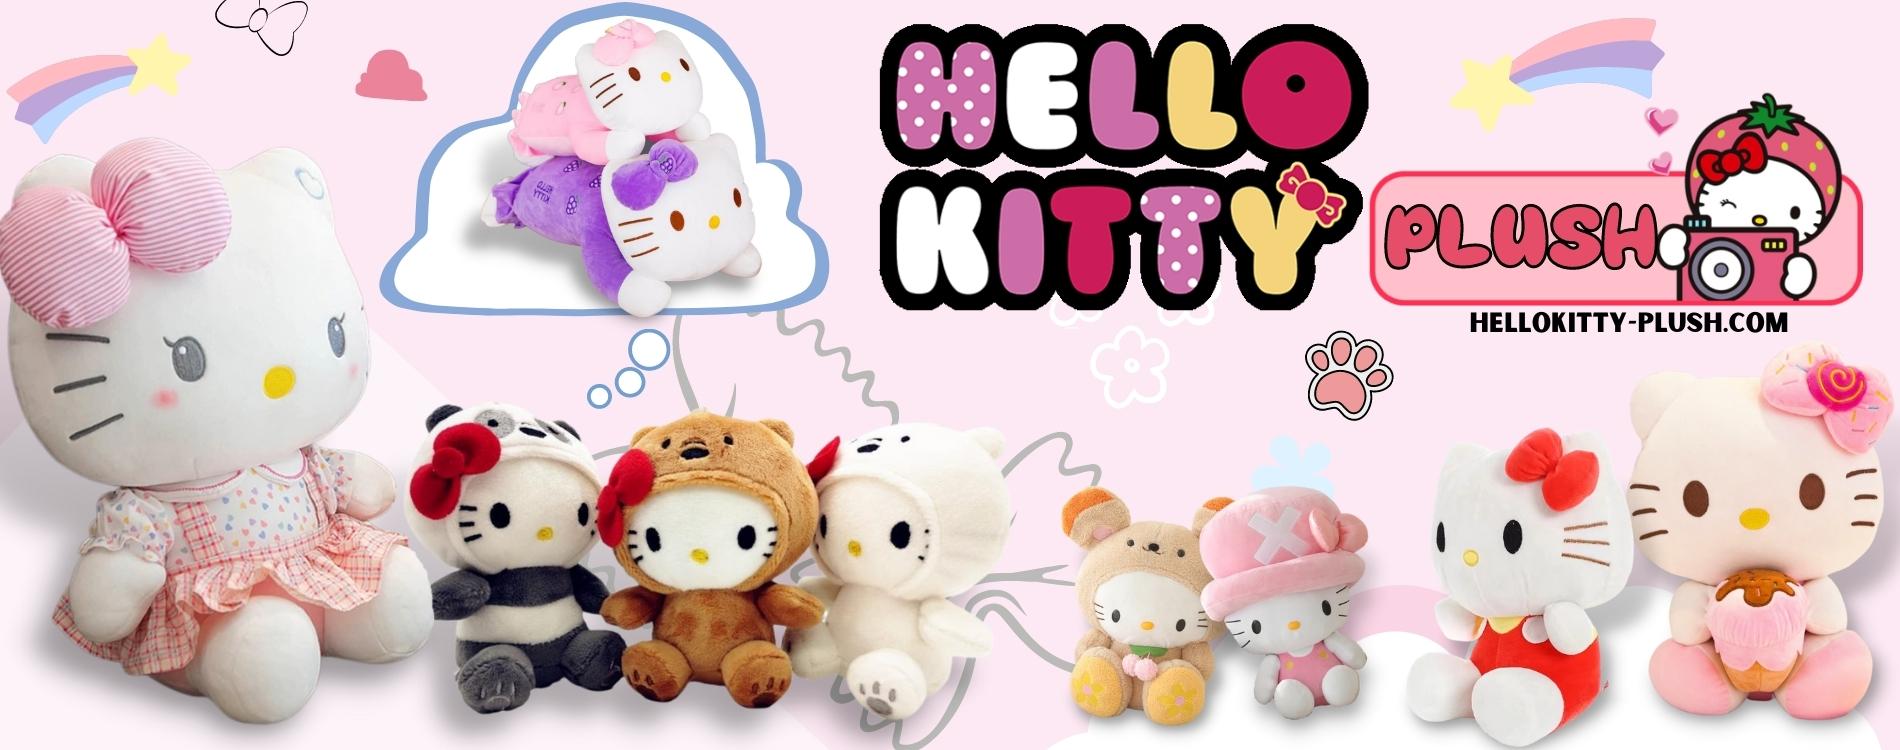 hello kitty plush banner 2